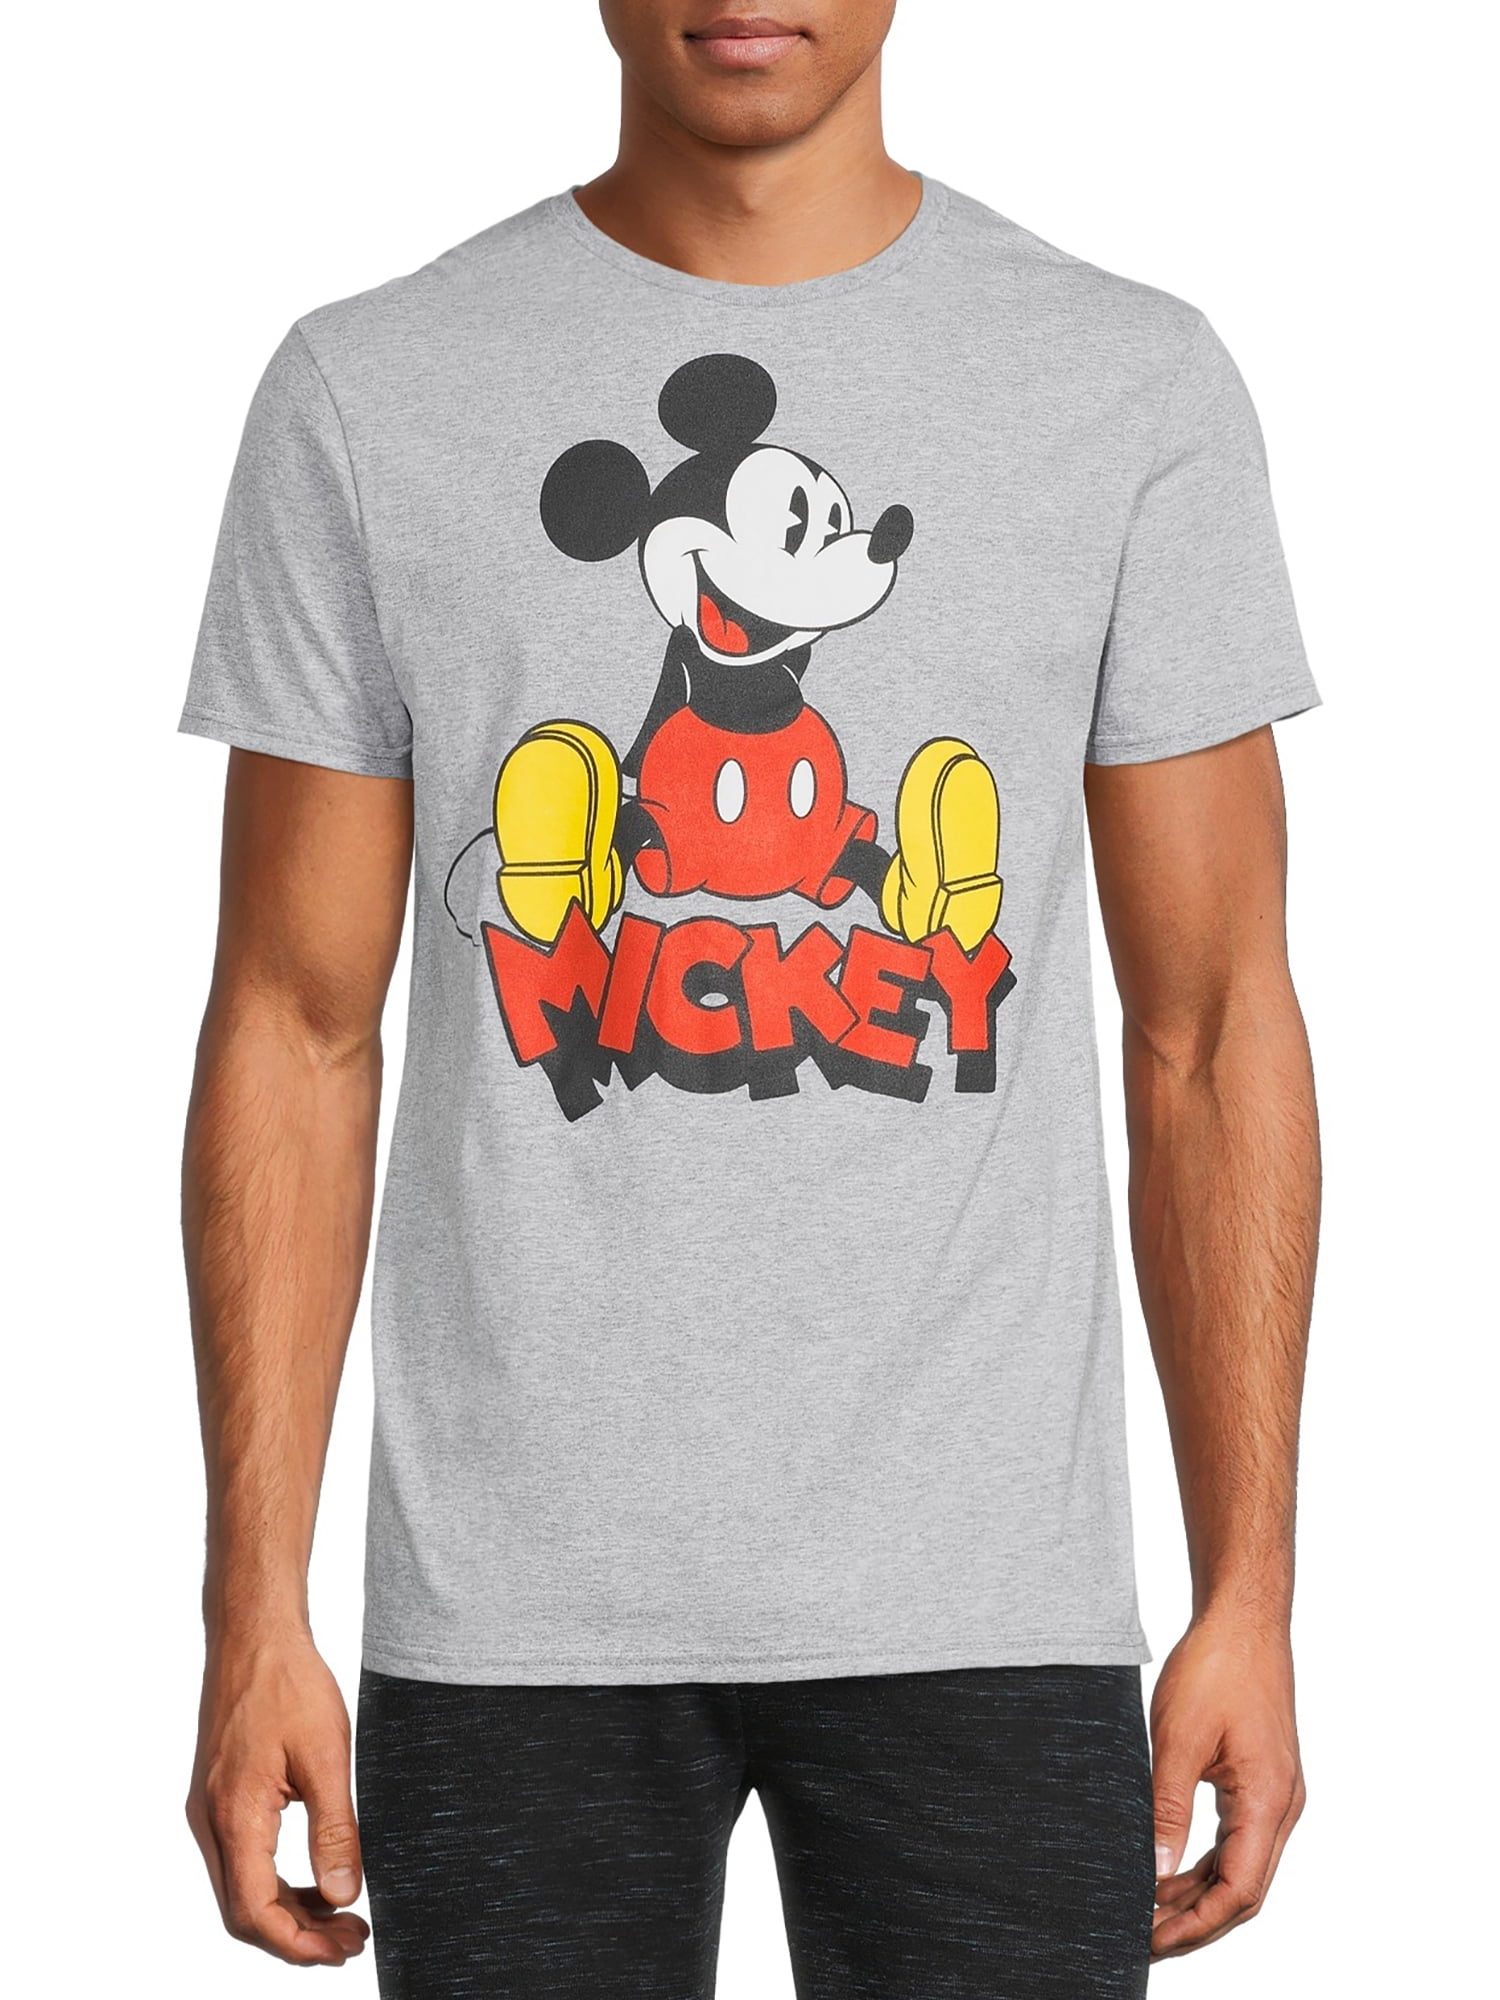 Mens Disney Brand Gray MICKEY MOUSE Short Sleeve T-shirt Size Medium New